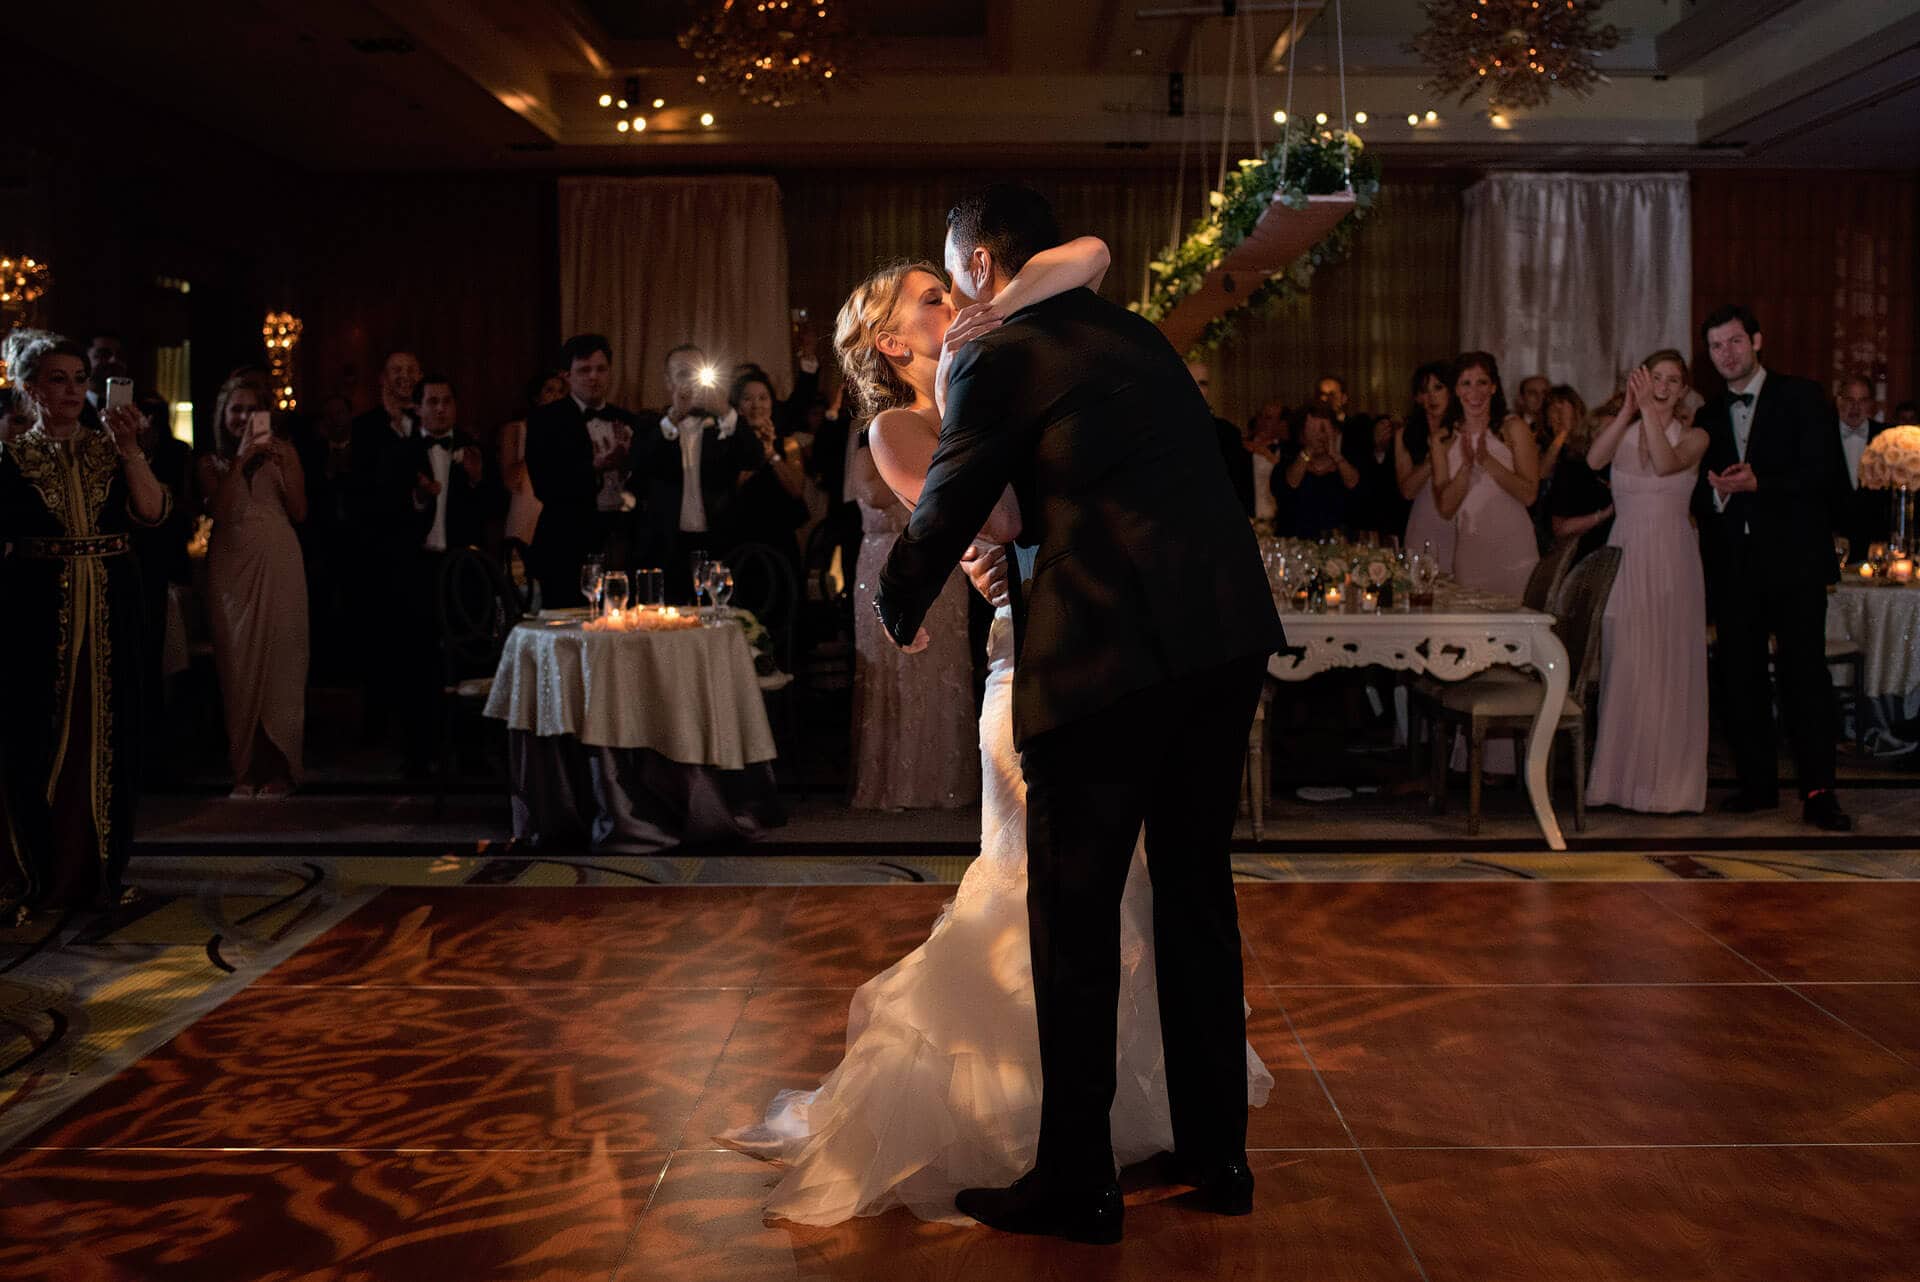 mandarin oriental boston wedding kiss at end of first dance in ballroom